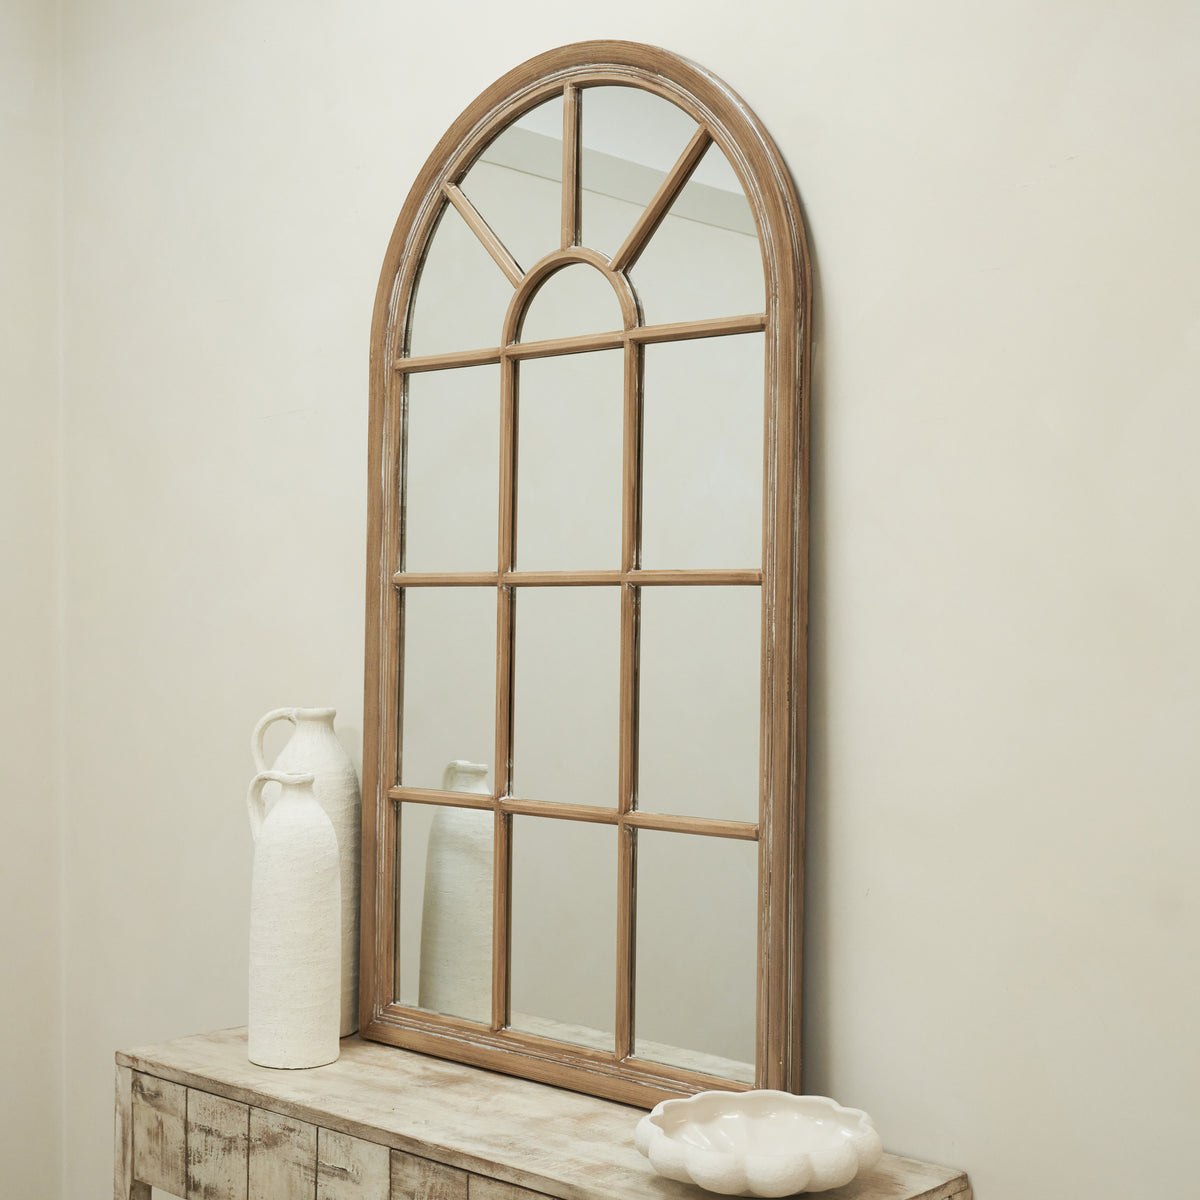 Arabella - Large Washed Wood Arched Shabby Chic Window Mirror 140cm x 80cm